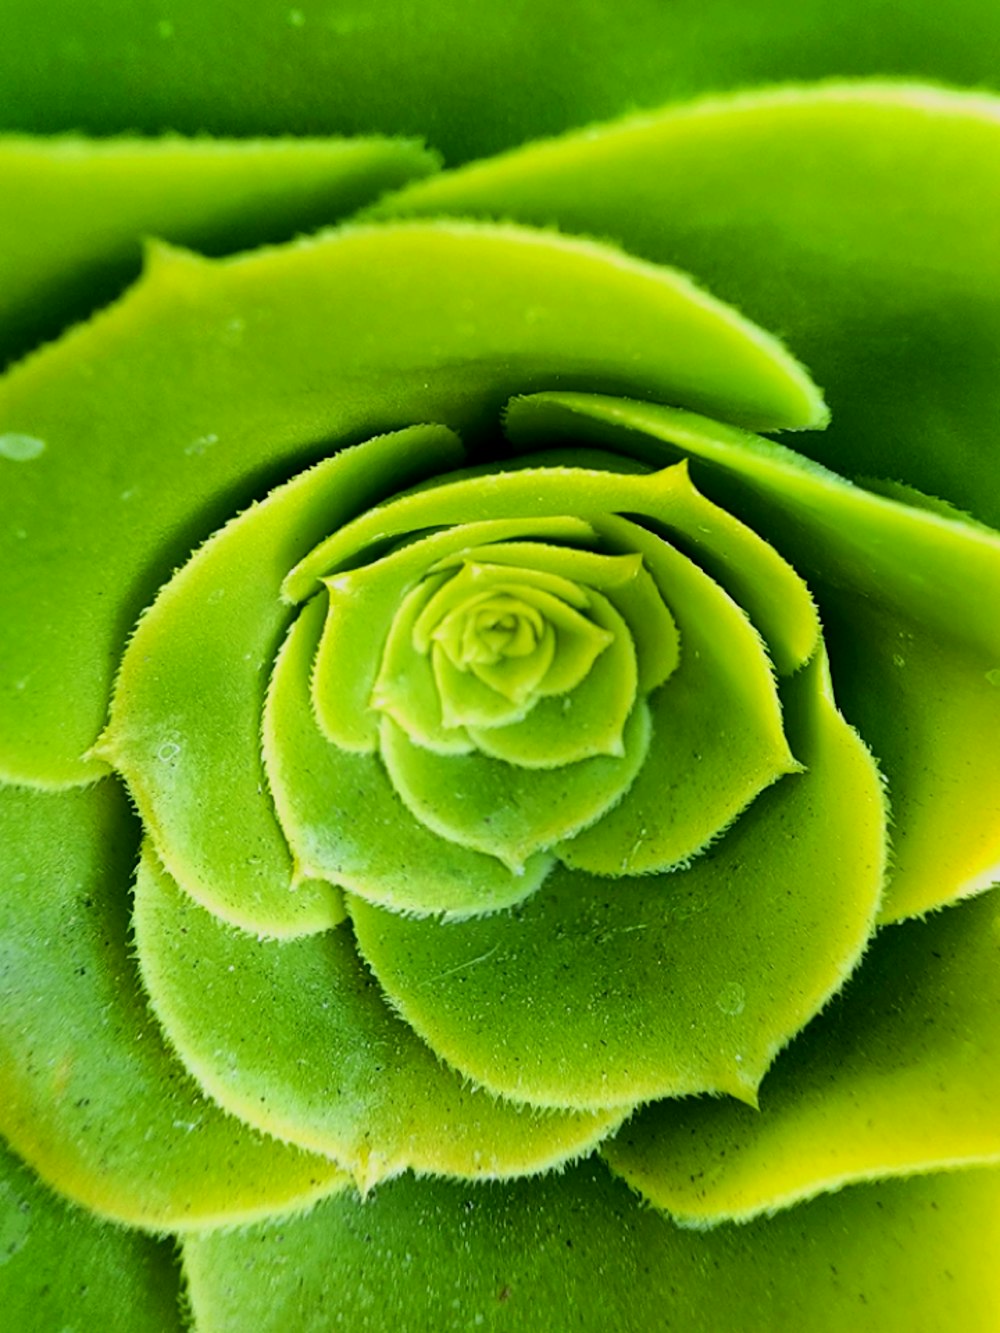 a close up of a green flower